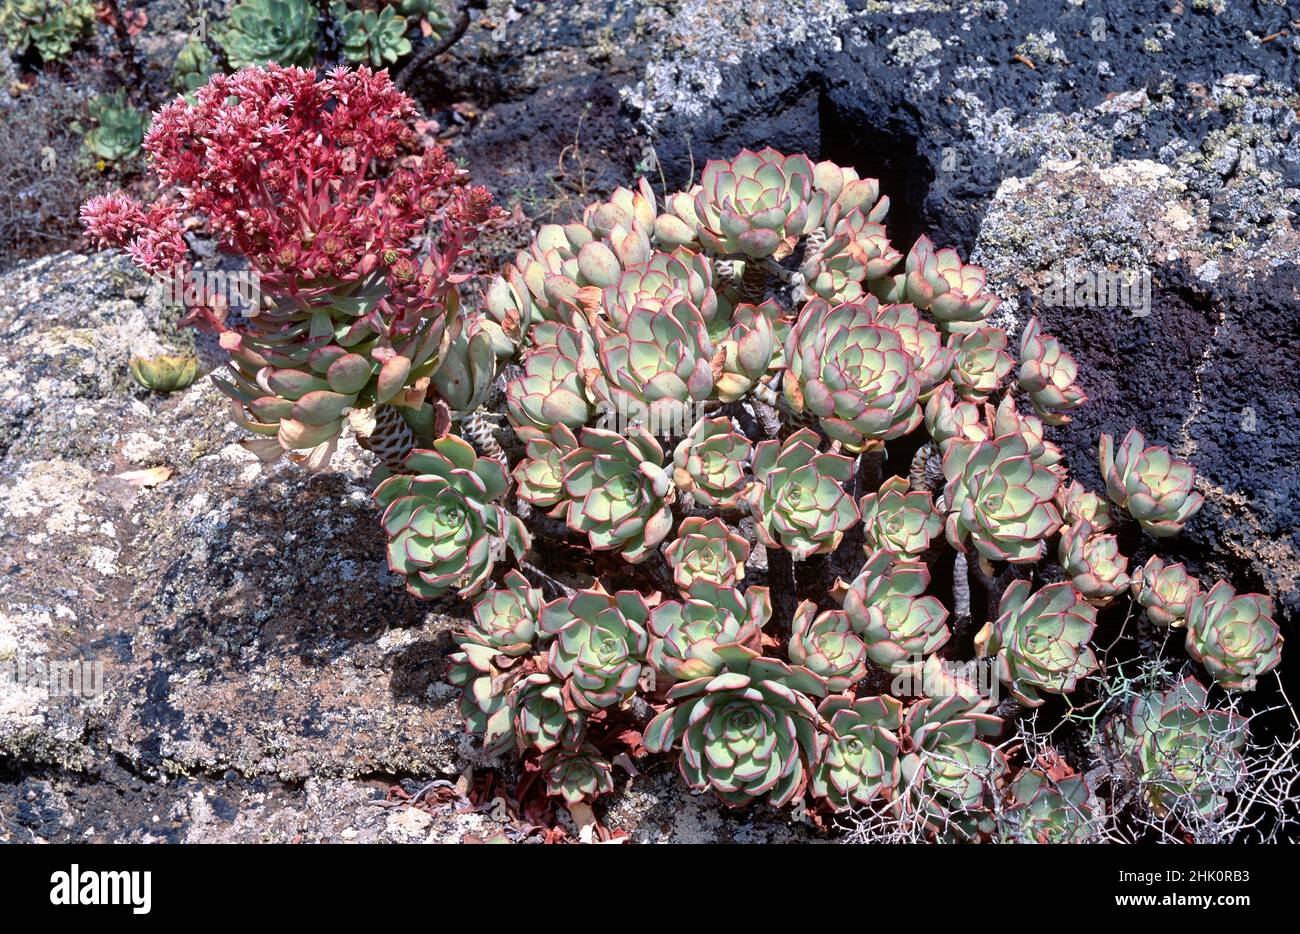 Bejeque de malpais (Aeonium lancerottense) is a succulent shrub endemic to Lanzarote, Canary Islands, Spain. Stock Photo